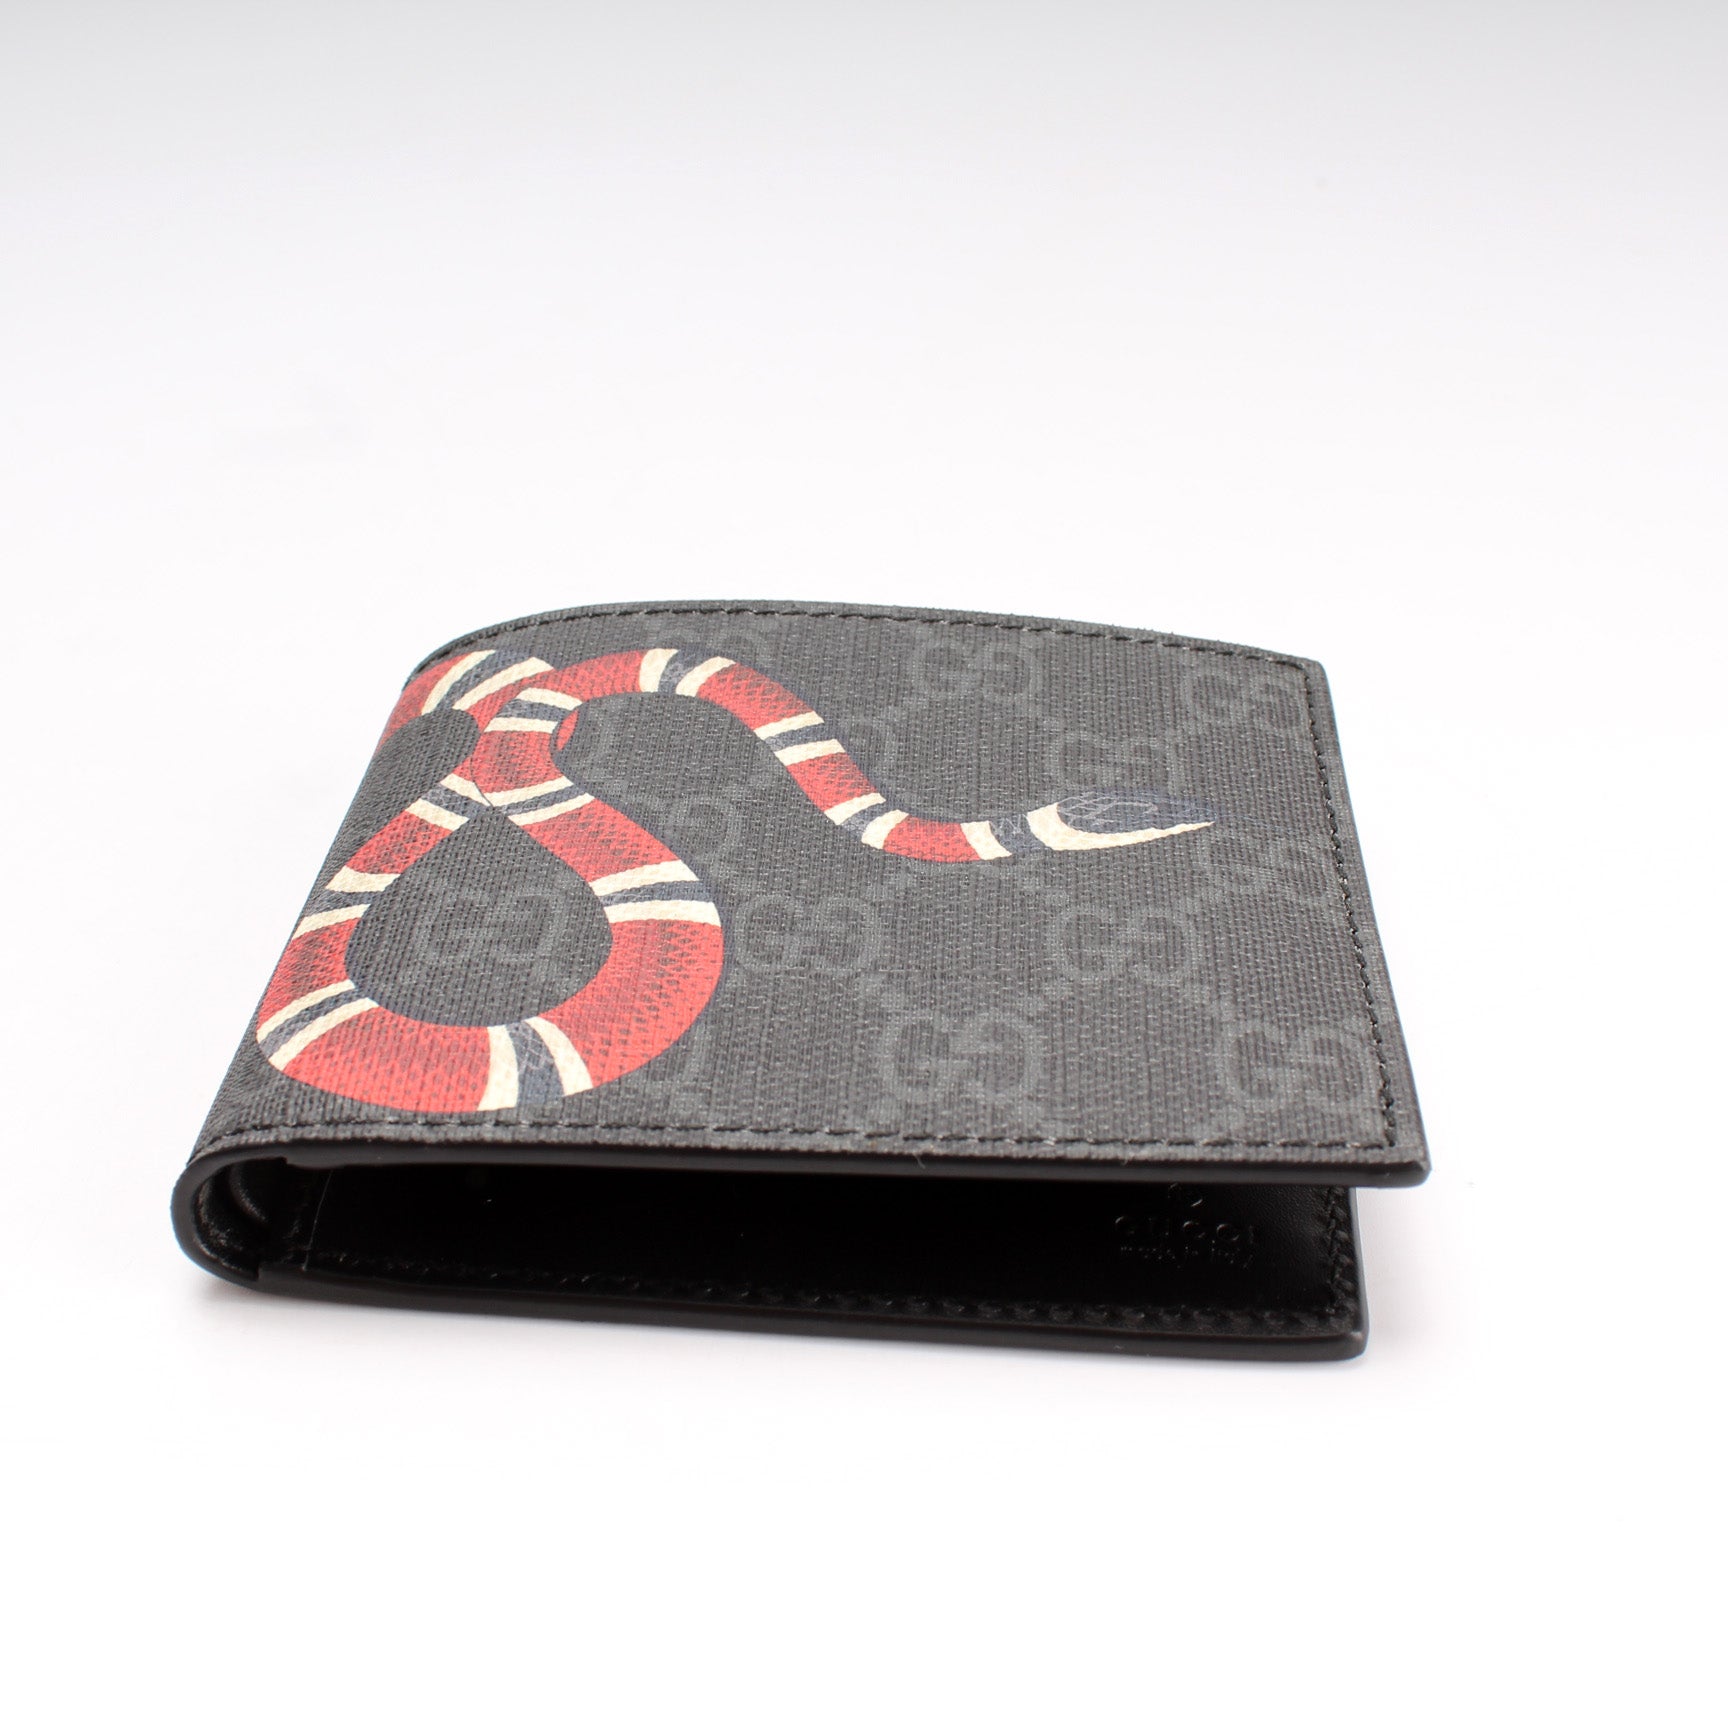 QC ) Gucci Kingsnake print GG Supreme wallet 500 Yuan WTC in